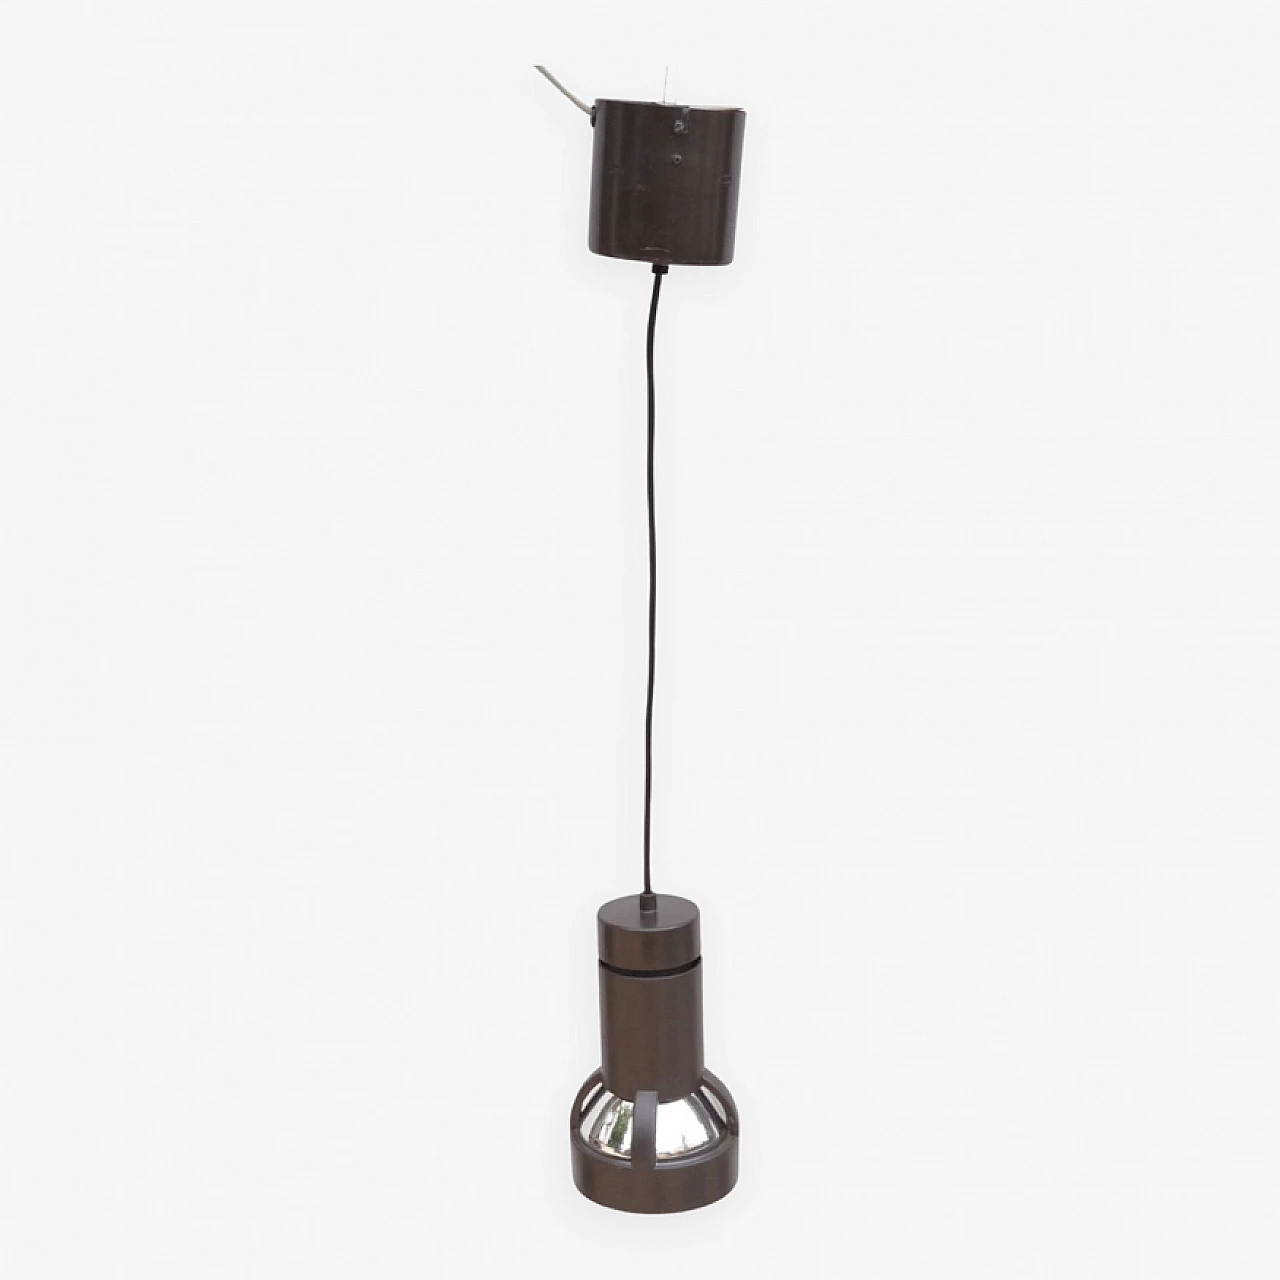 Osram Floraset HQL-R De Luxe pendant lamp, 1980s 2